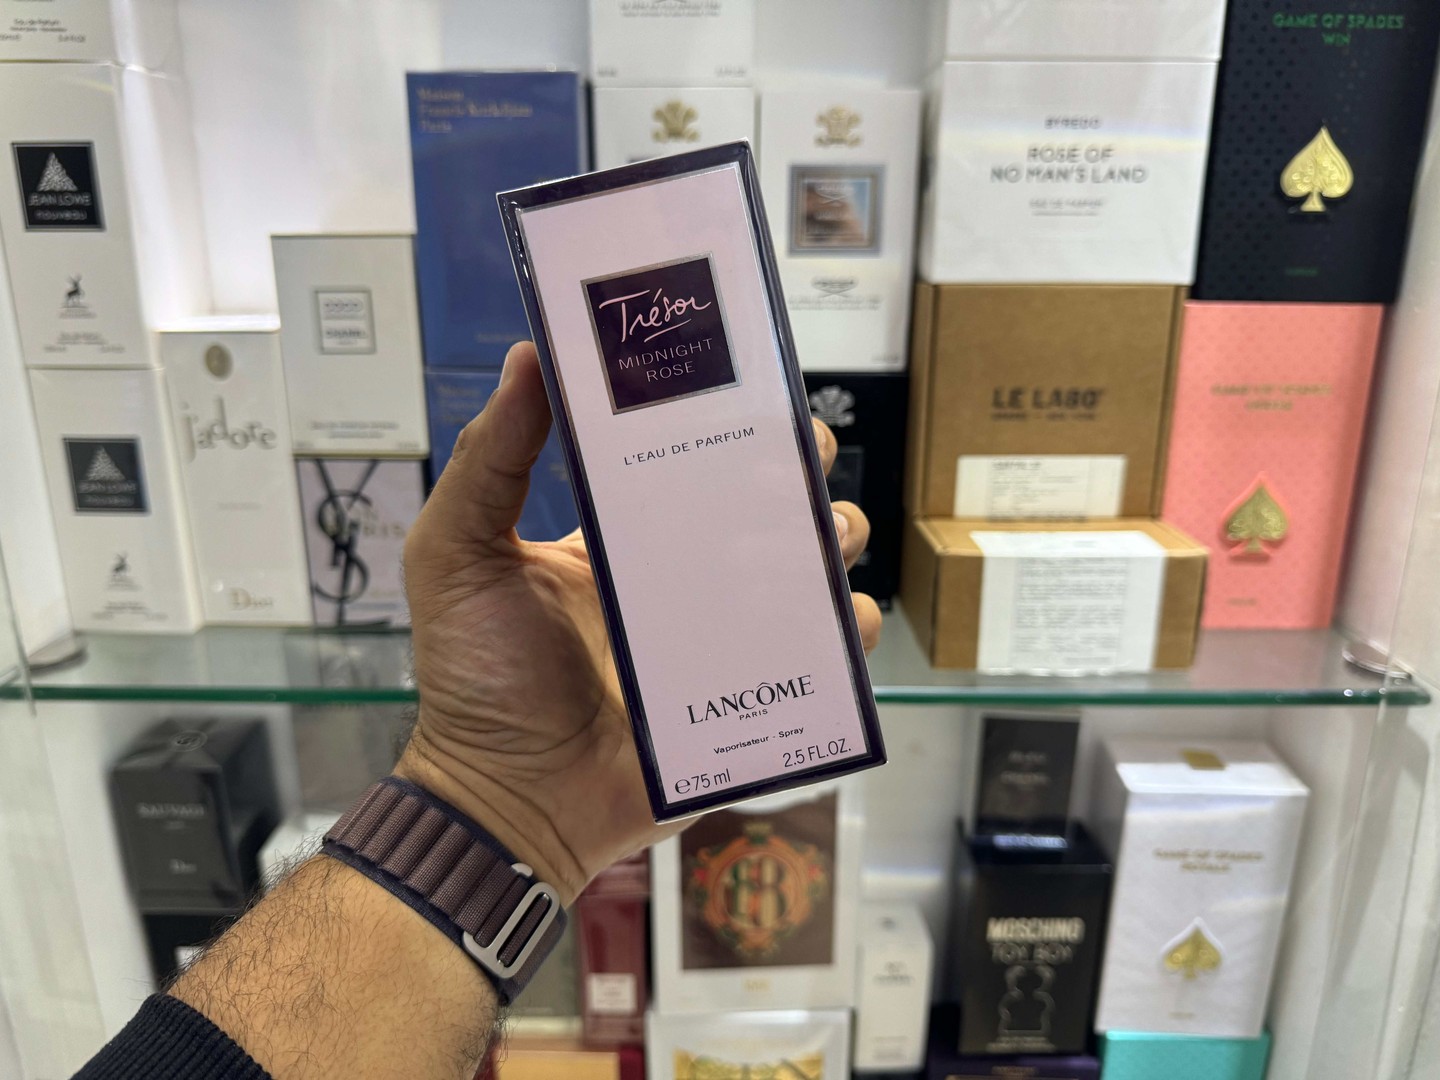 joyas, relojes y accesorios - Perfume Lancôme Tréson Midnight Rose L'Eau de Parfum Nuevo, Original $ 5,500 NEG 0